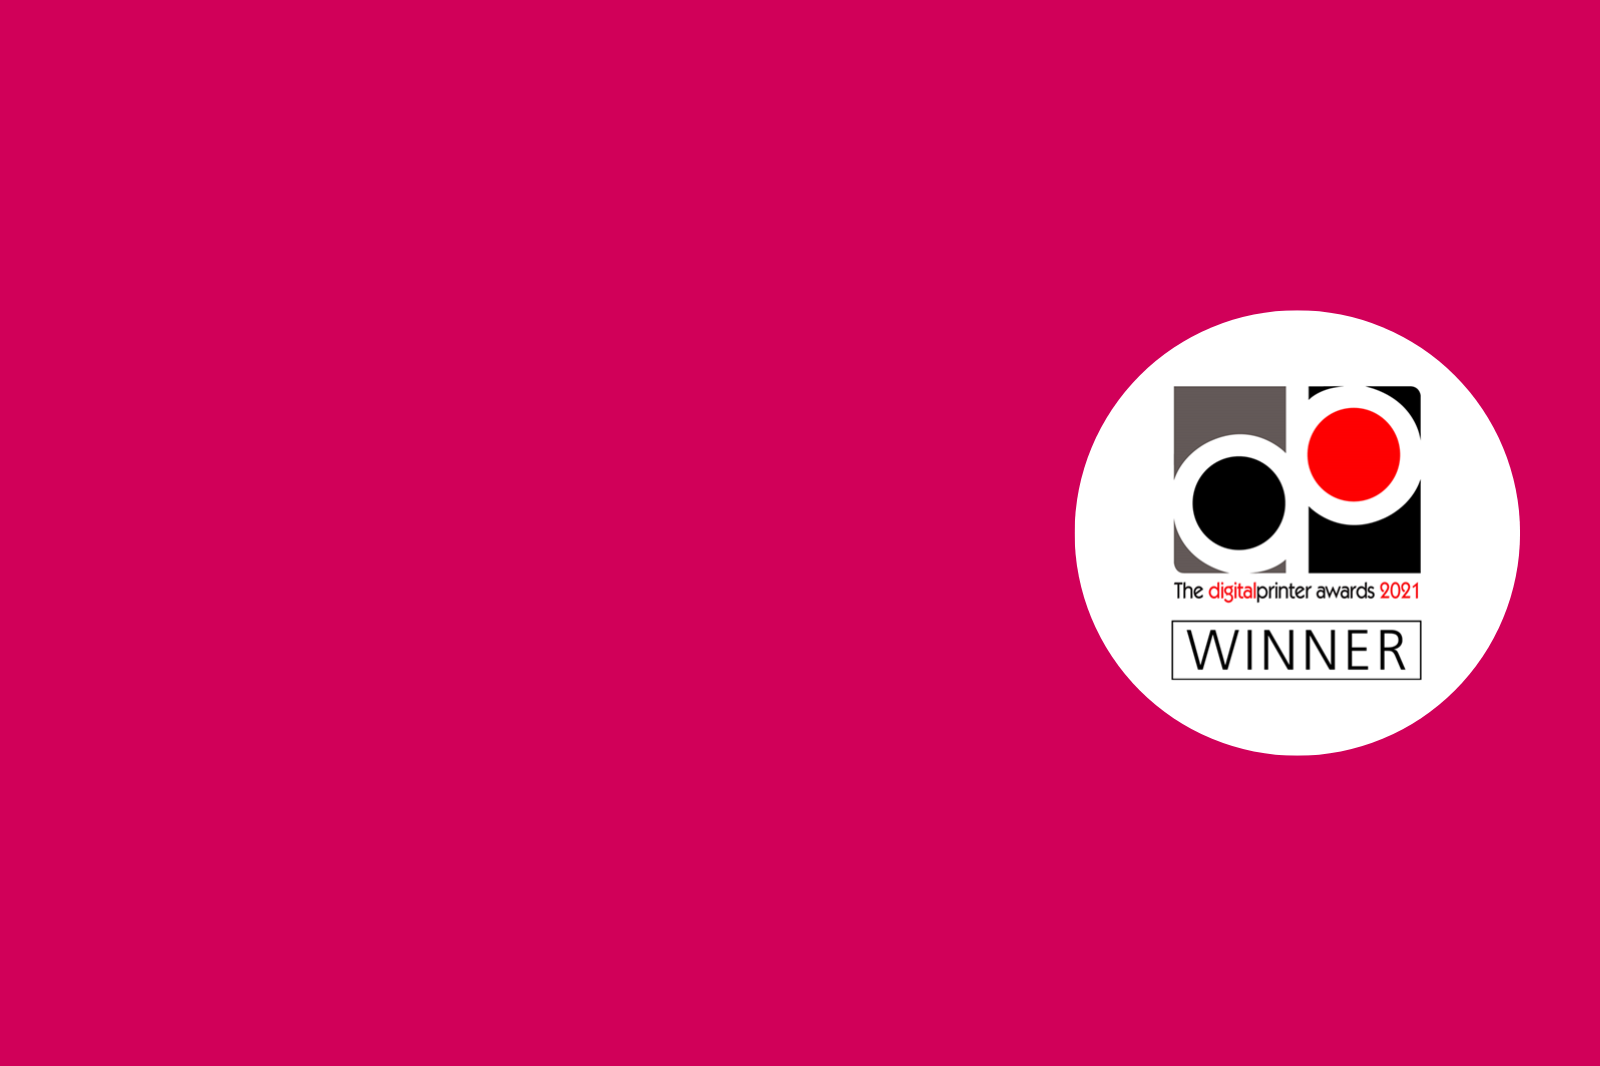 A digital printer awards winner 2021 logo displayed on a pink background.